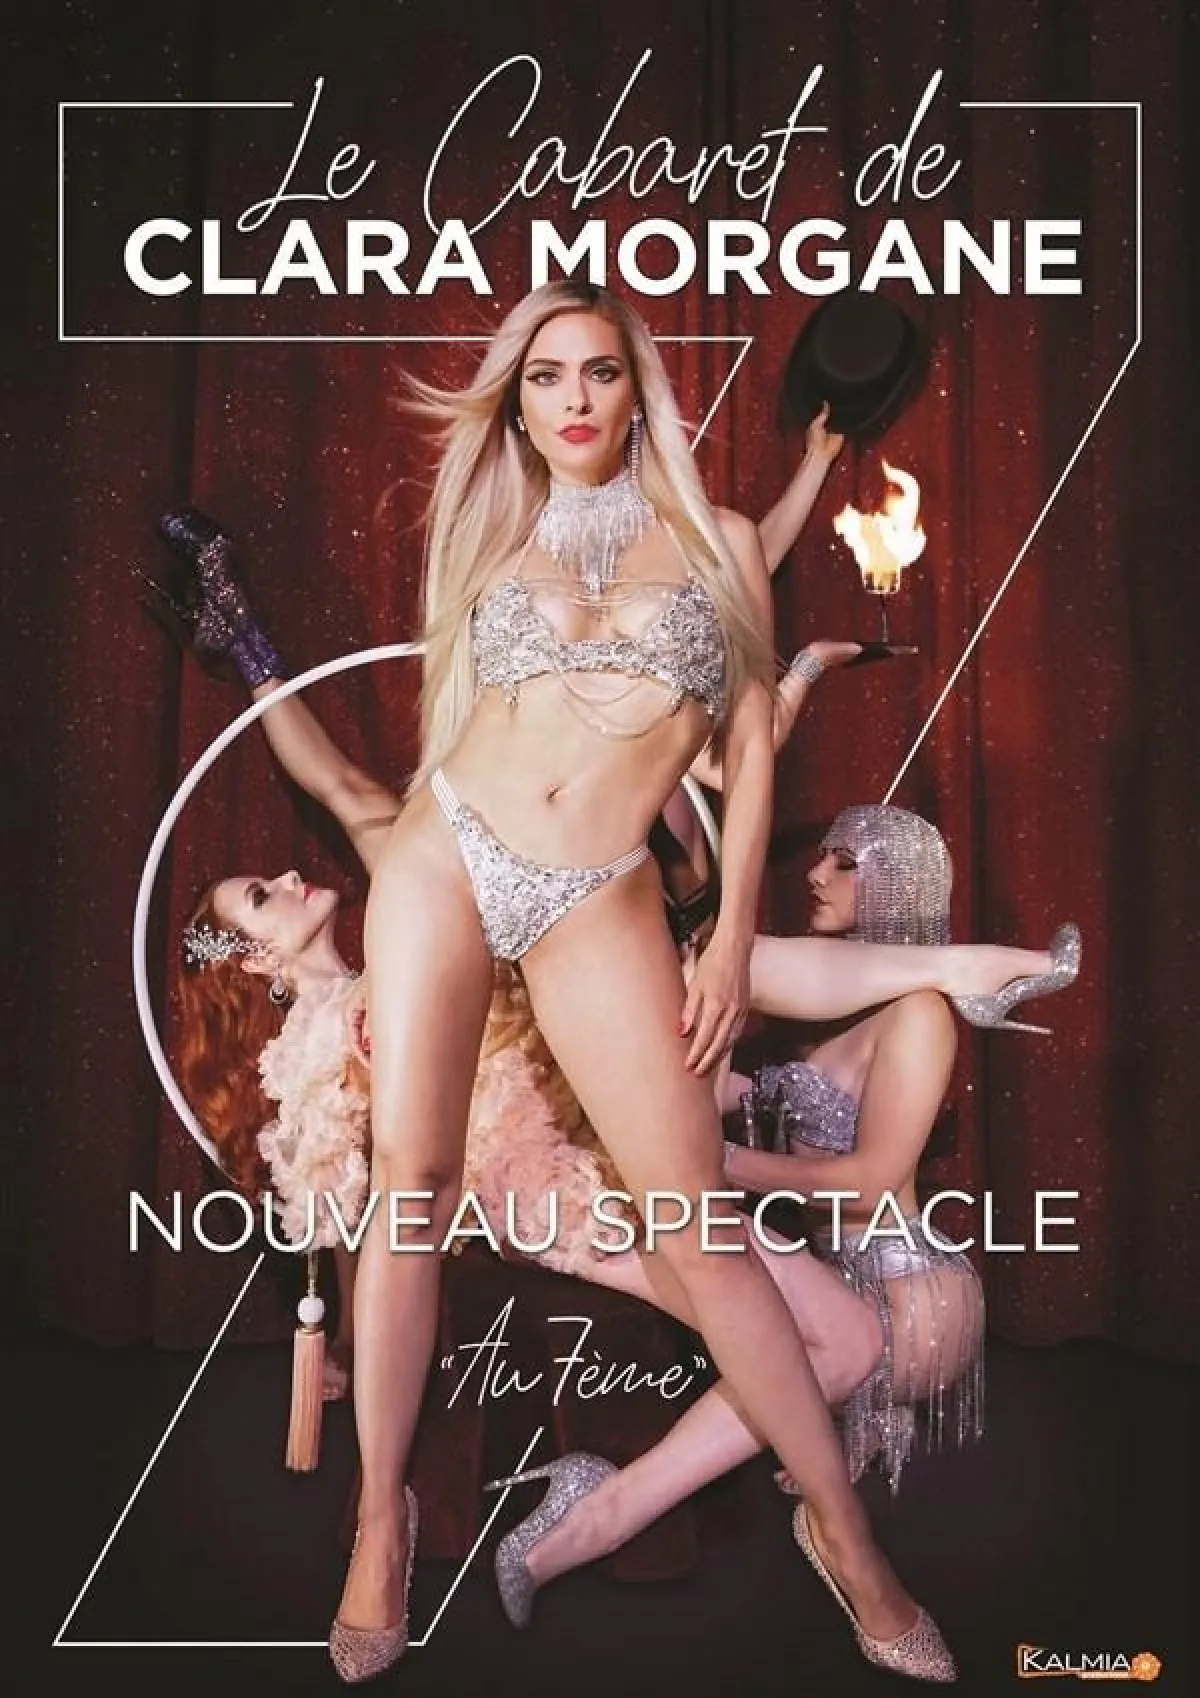 Le Cabaret De Clara Morgane at Bourse du Travail Tickets